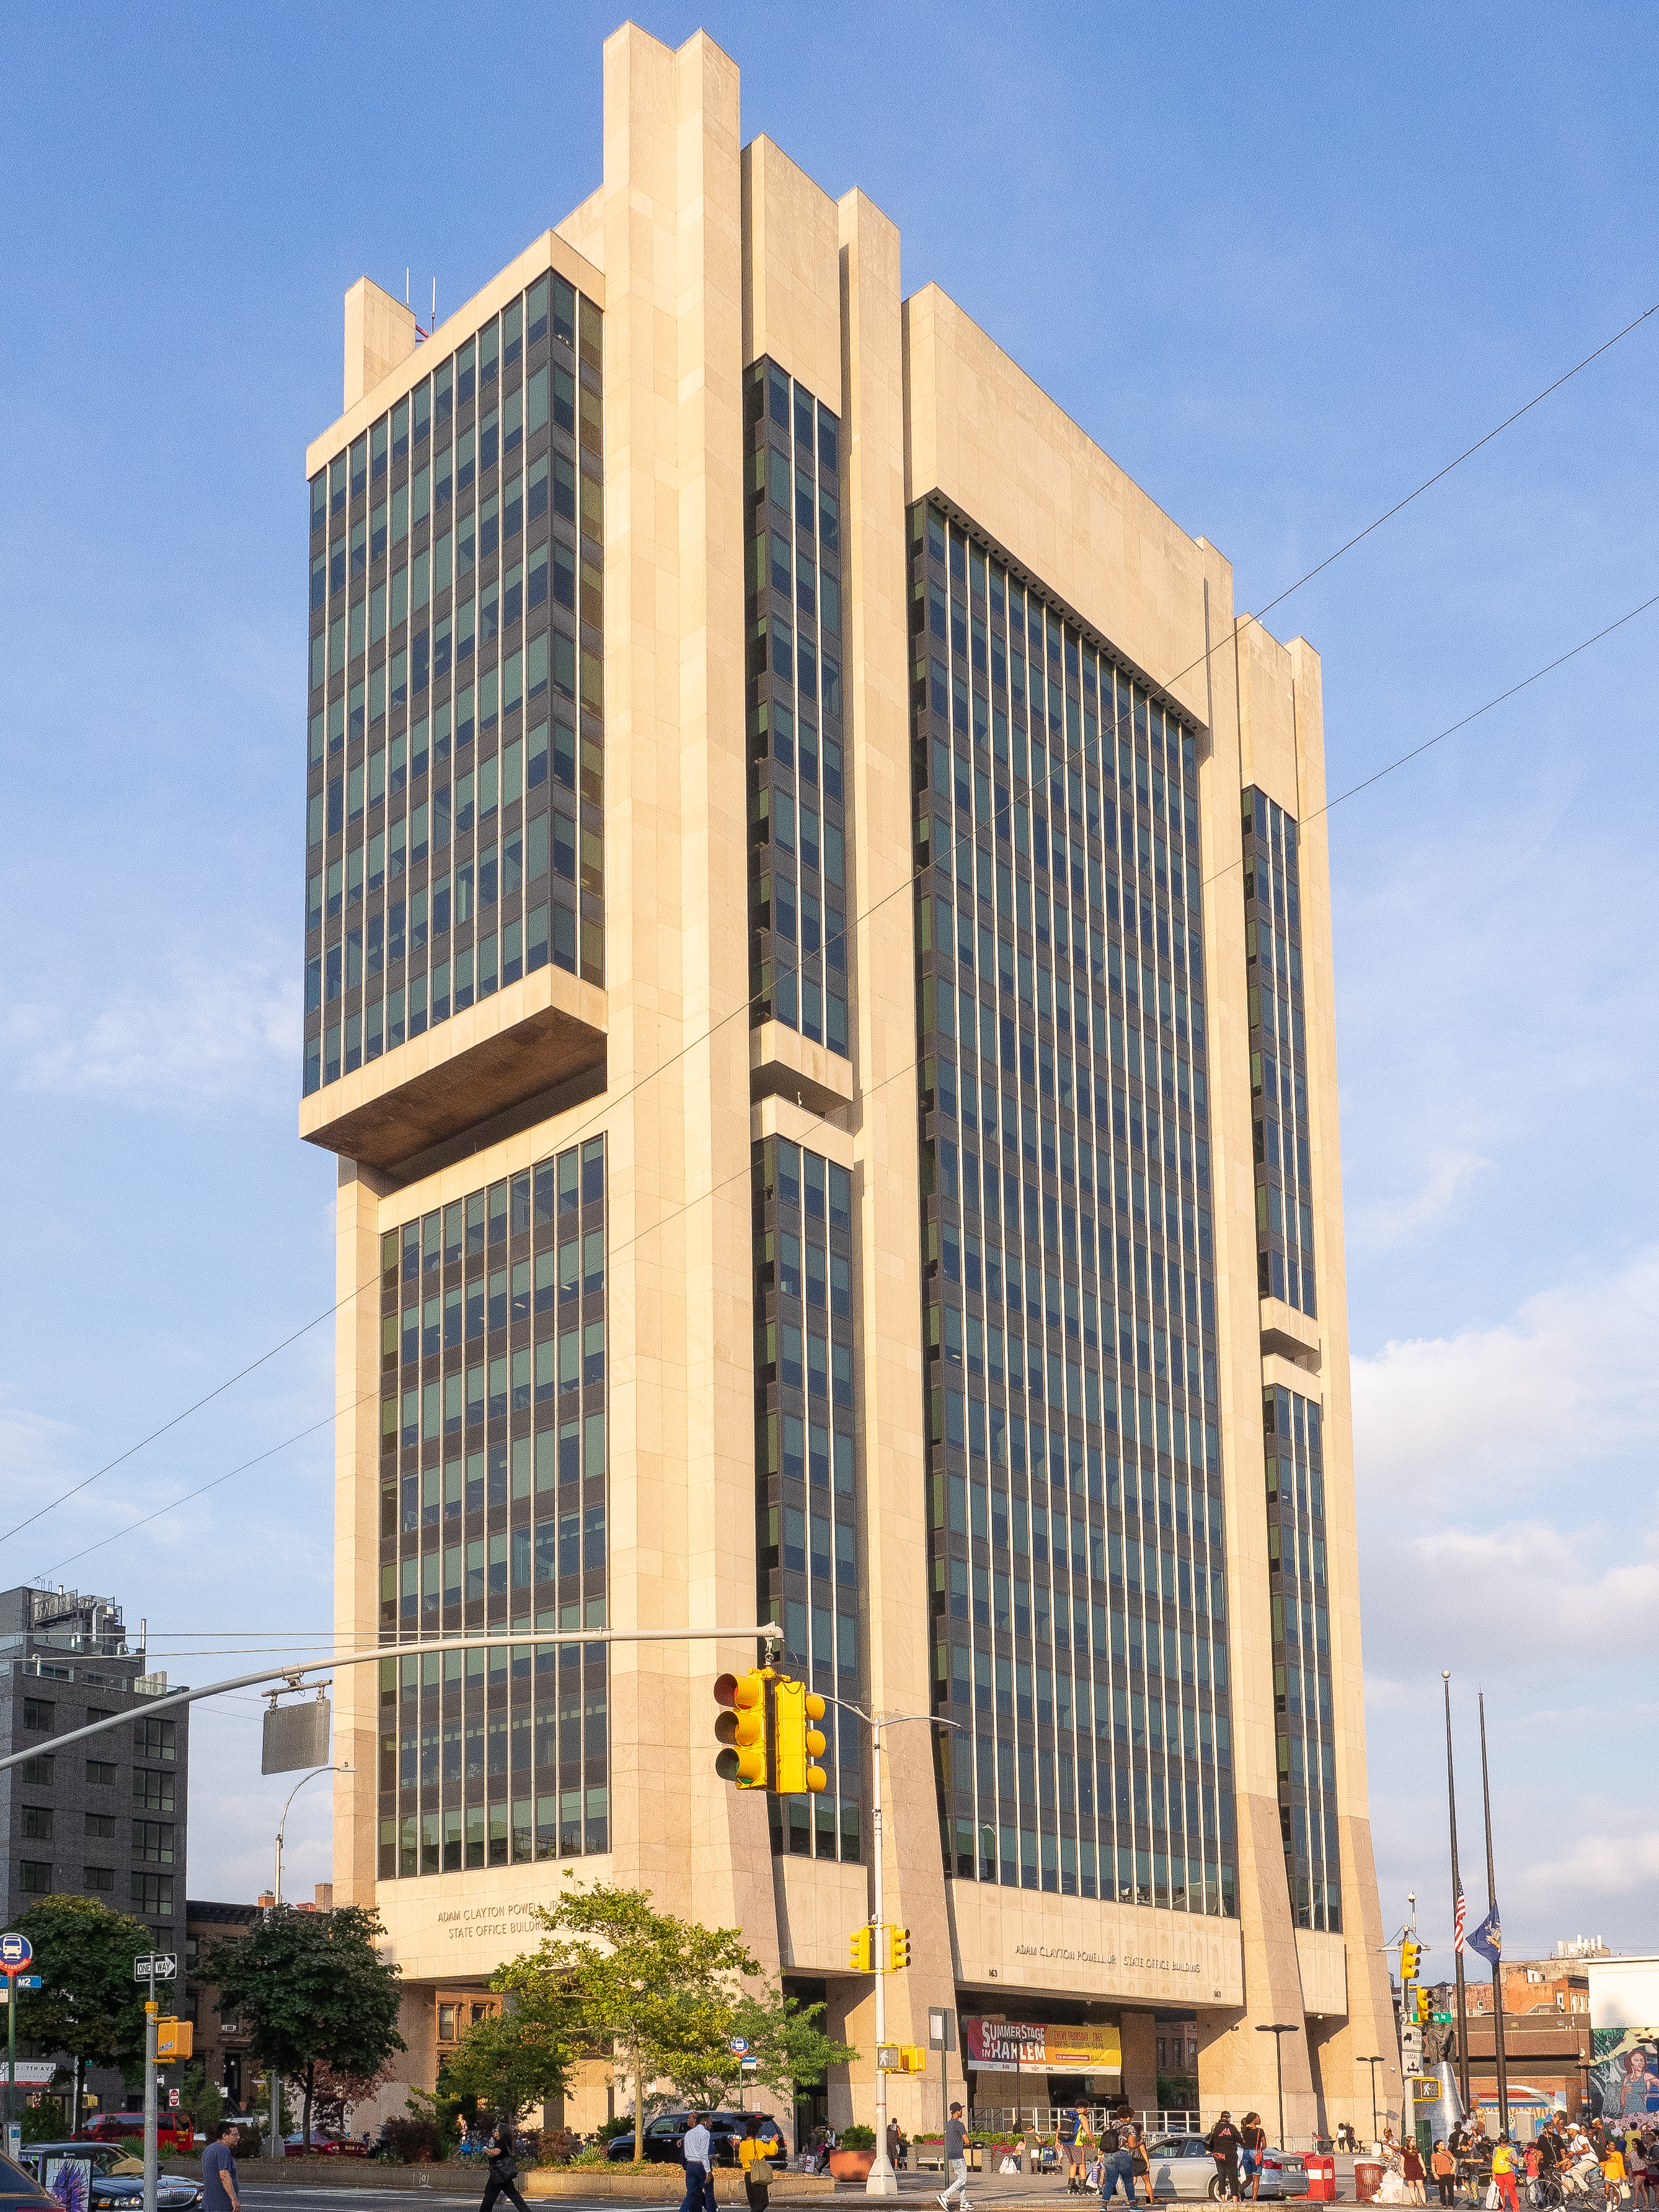 File:Harlem - Adam Clayton Powell Jr State Office Building  (48555167501).jpg - Wikimedia Commons